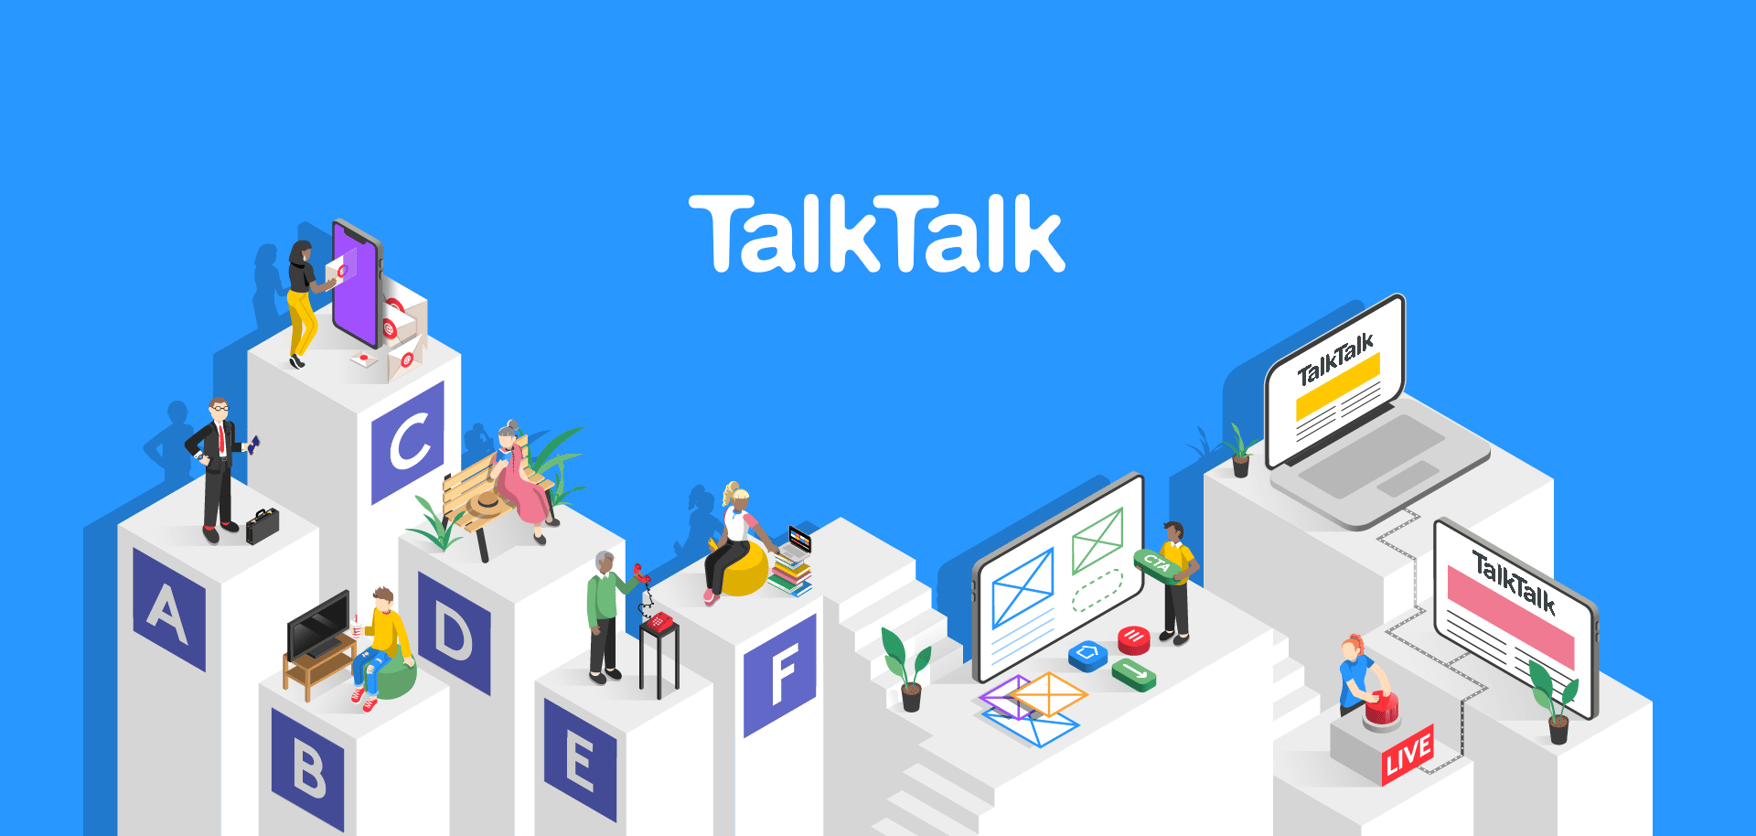 New website_Talk talk hero_large